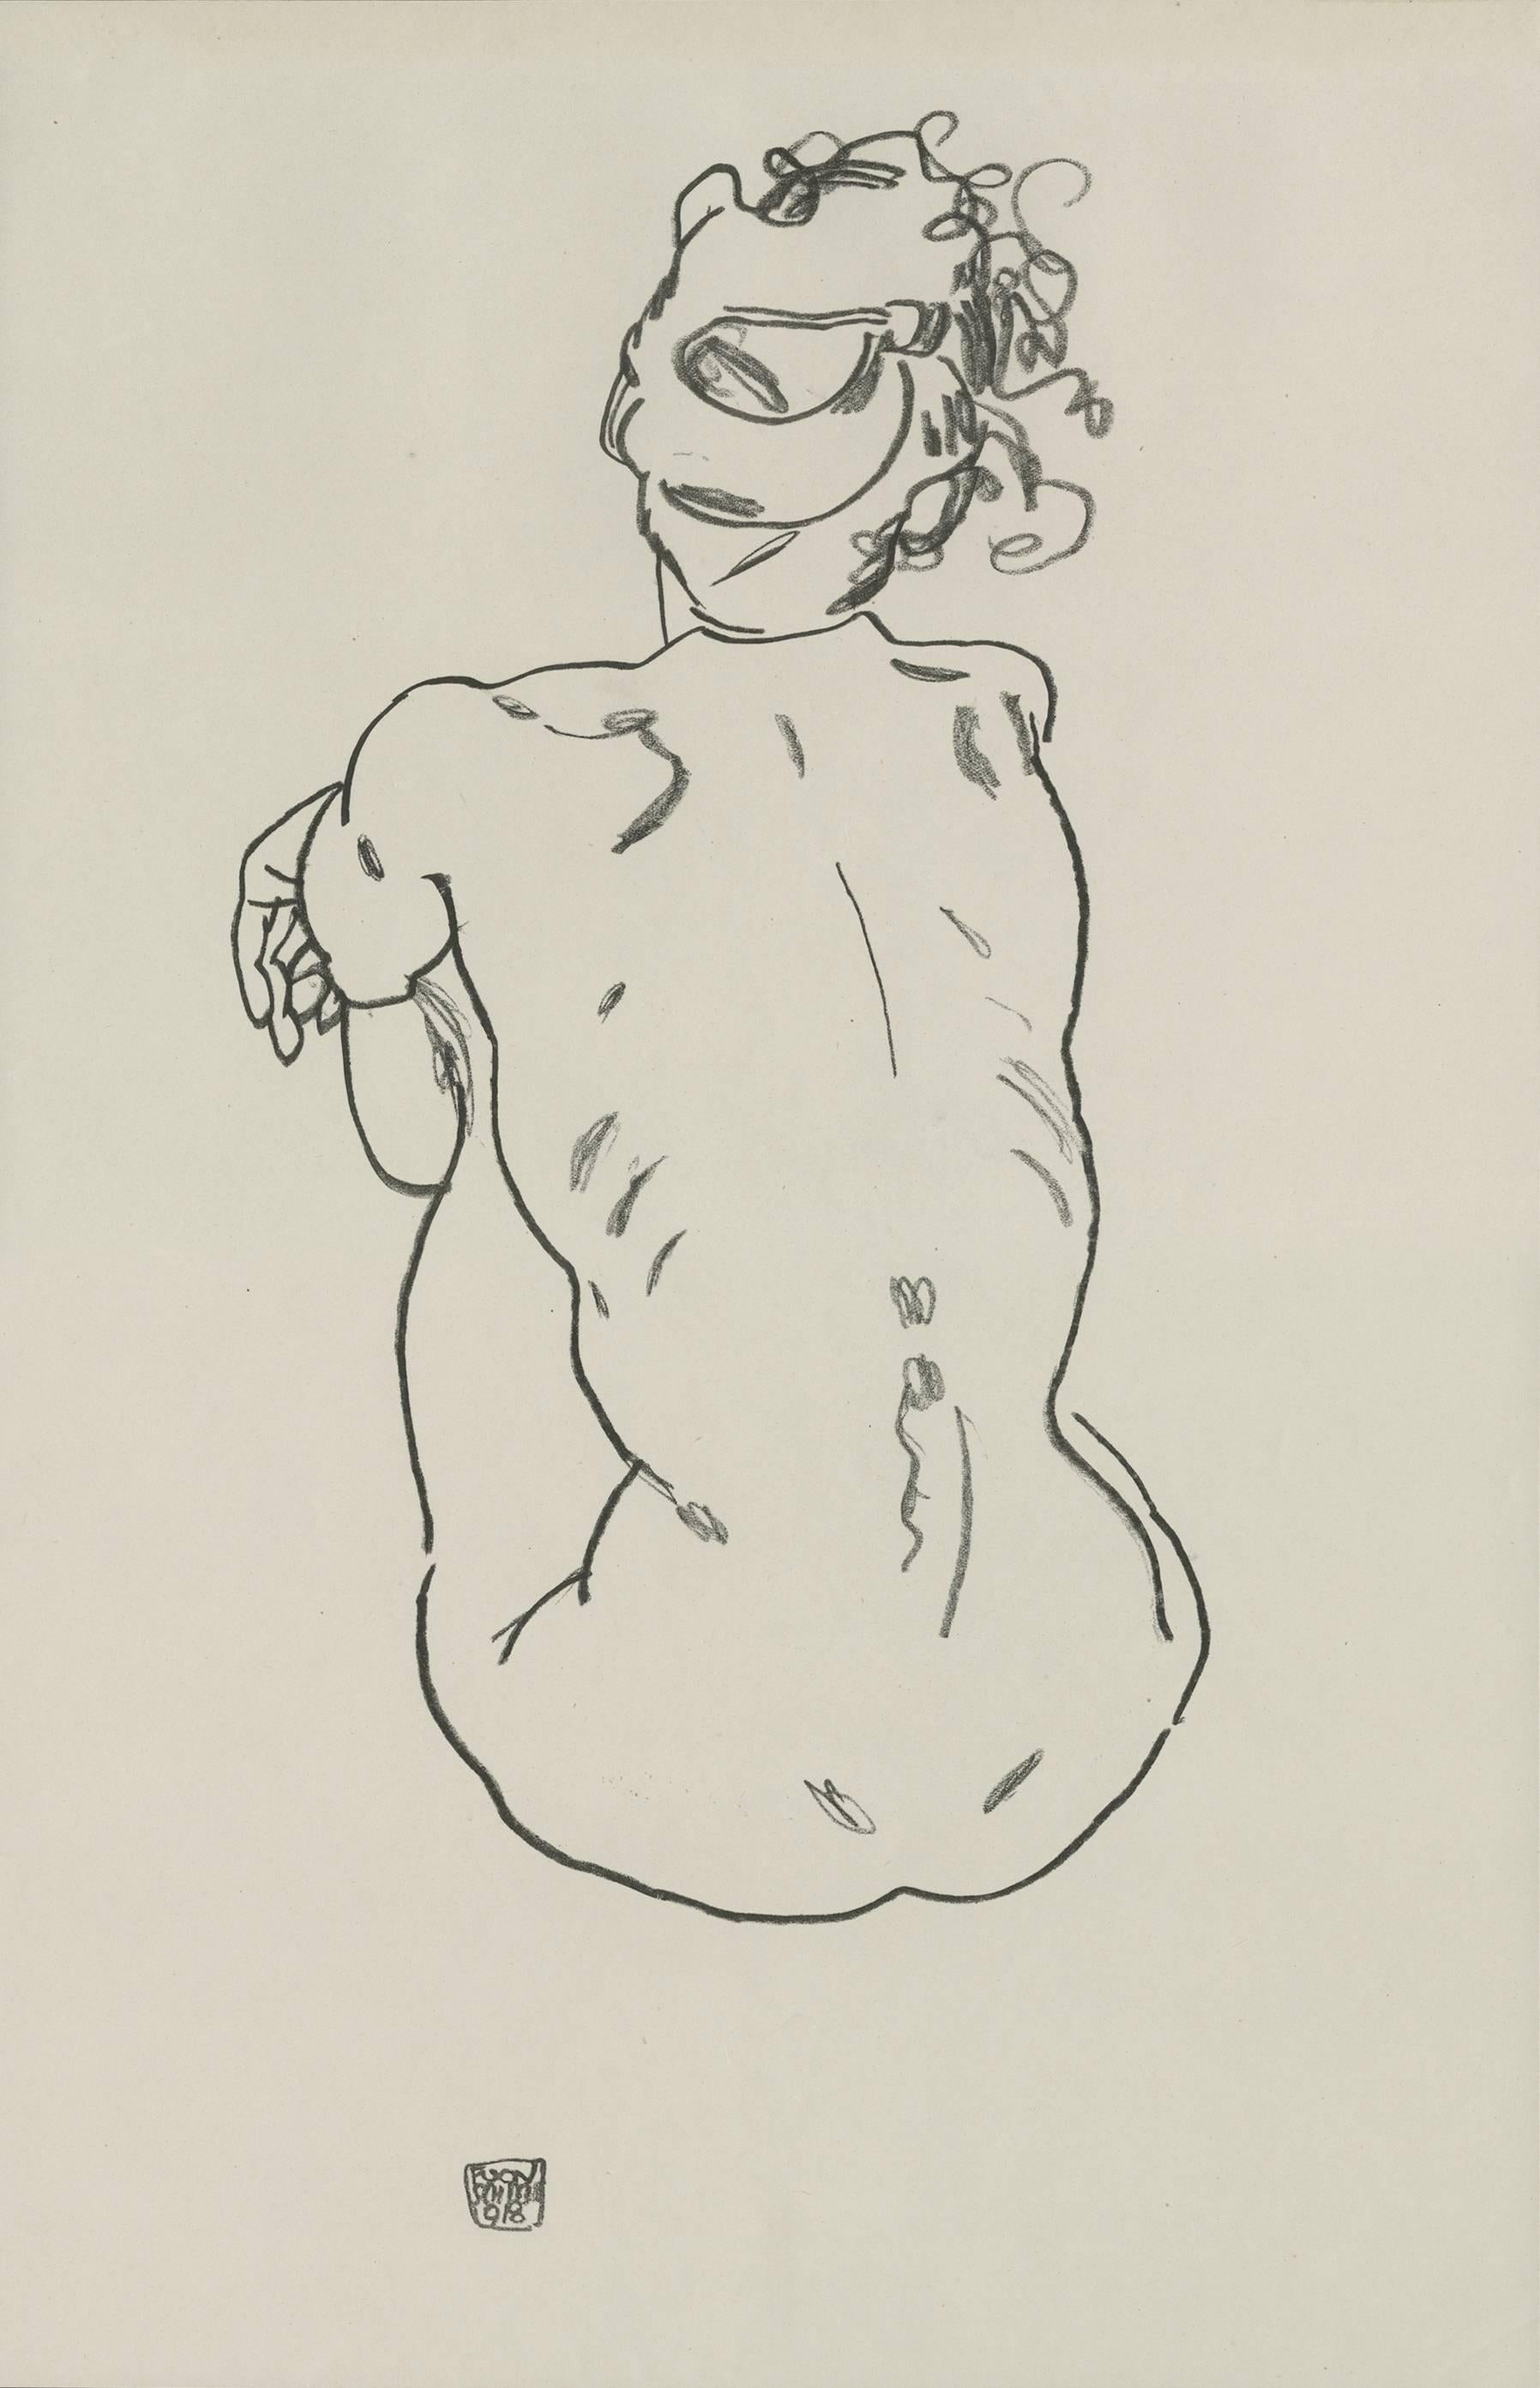 E. Strache, Handzeichnungen folio, "Female Nude, Back View" Collotype plate